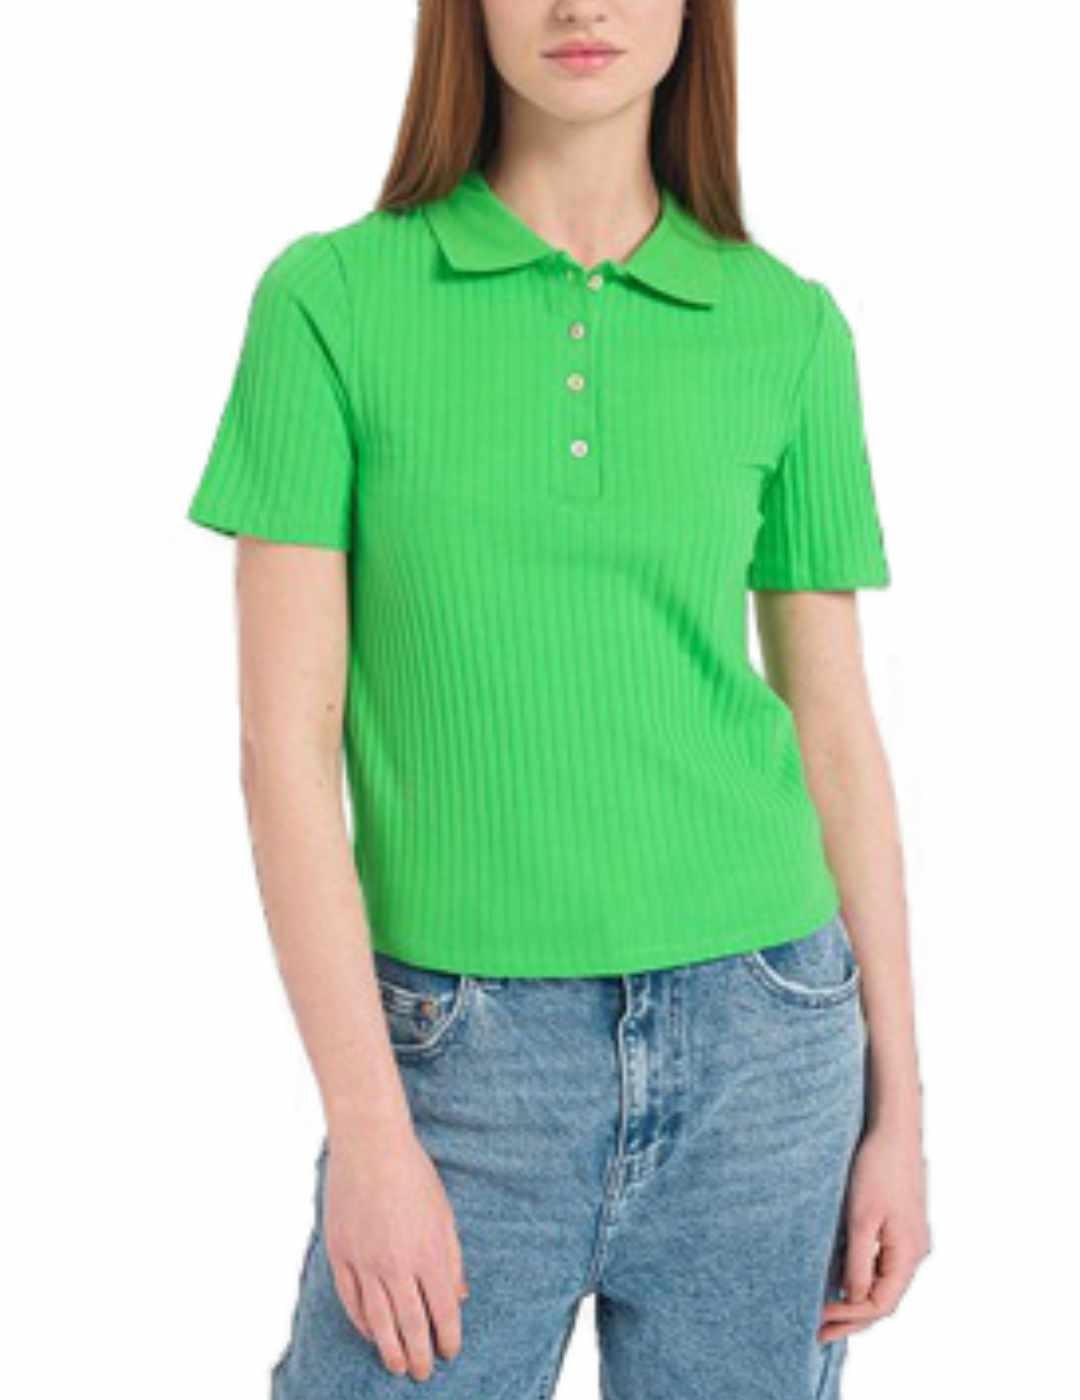  Polo Only Elsa  en color verde manga corta para mujer